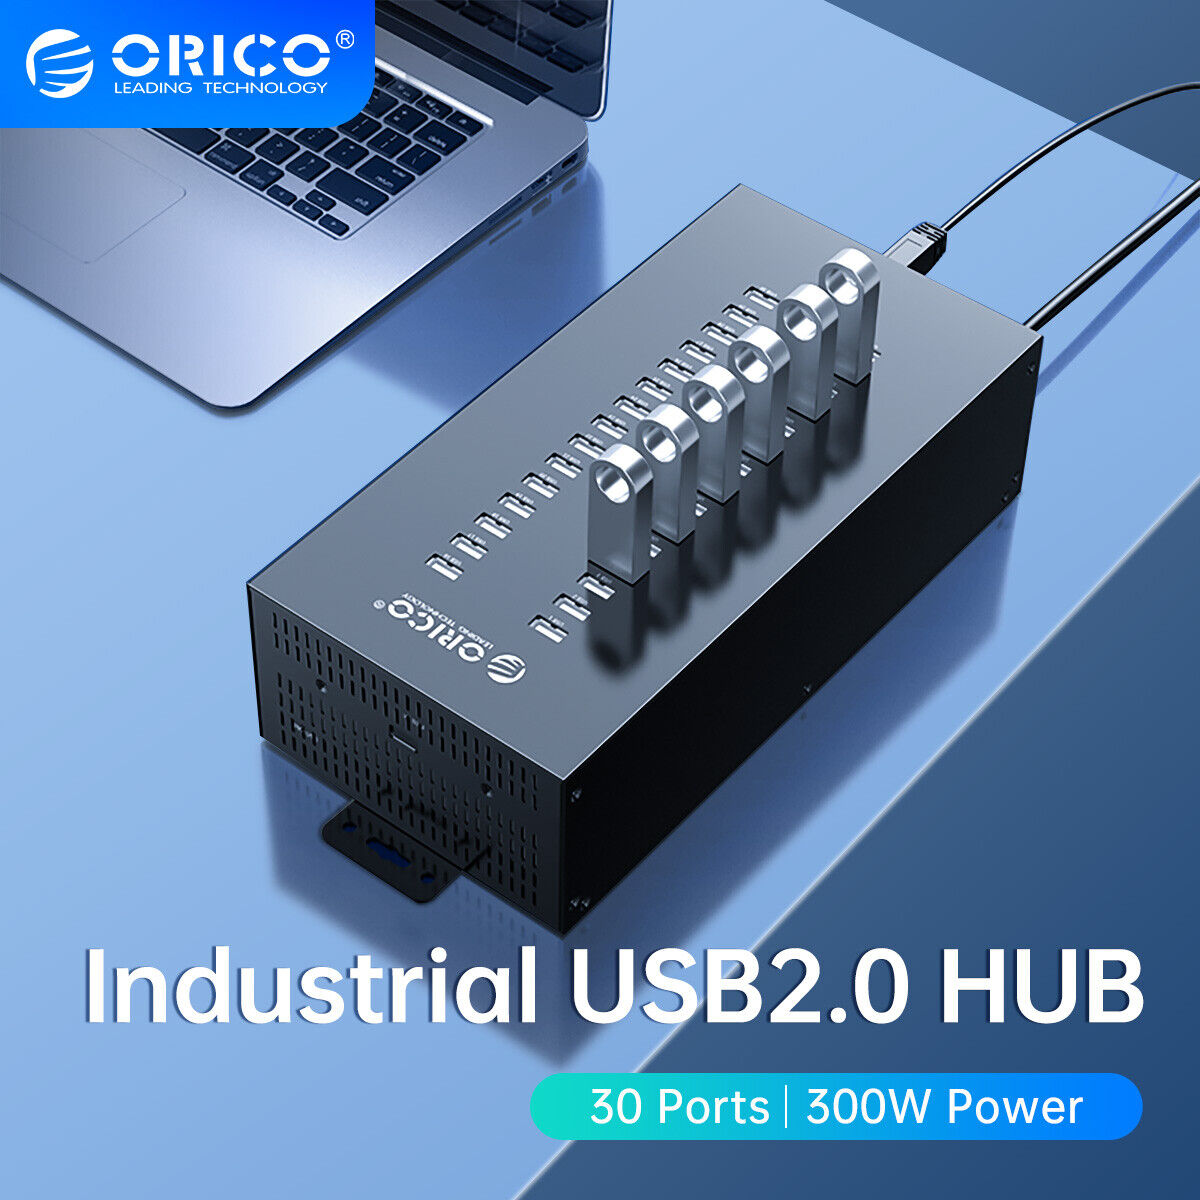 ORICO USB 2.0 Metal Hub Industrial Commercial 20-30 Ports 300W Powered Data Hub